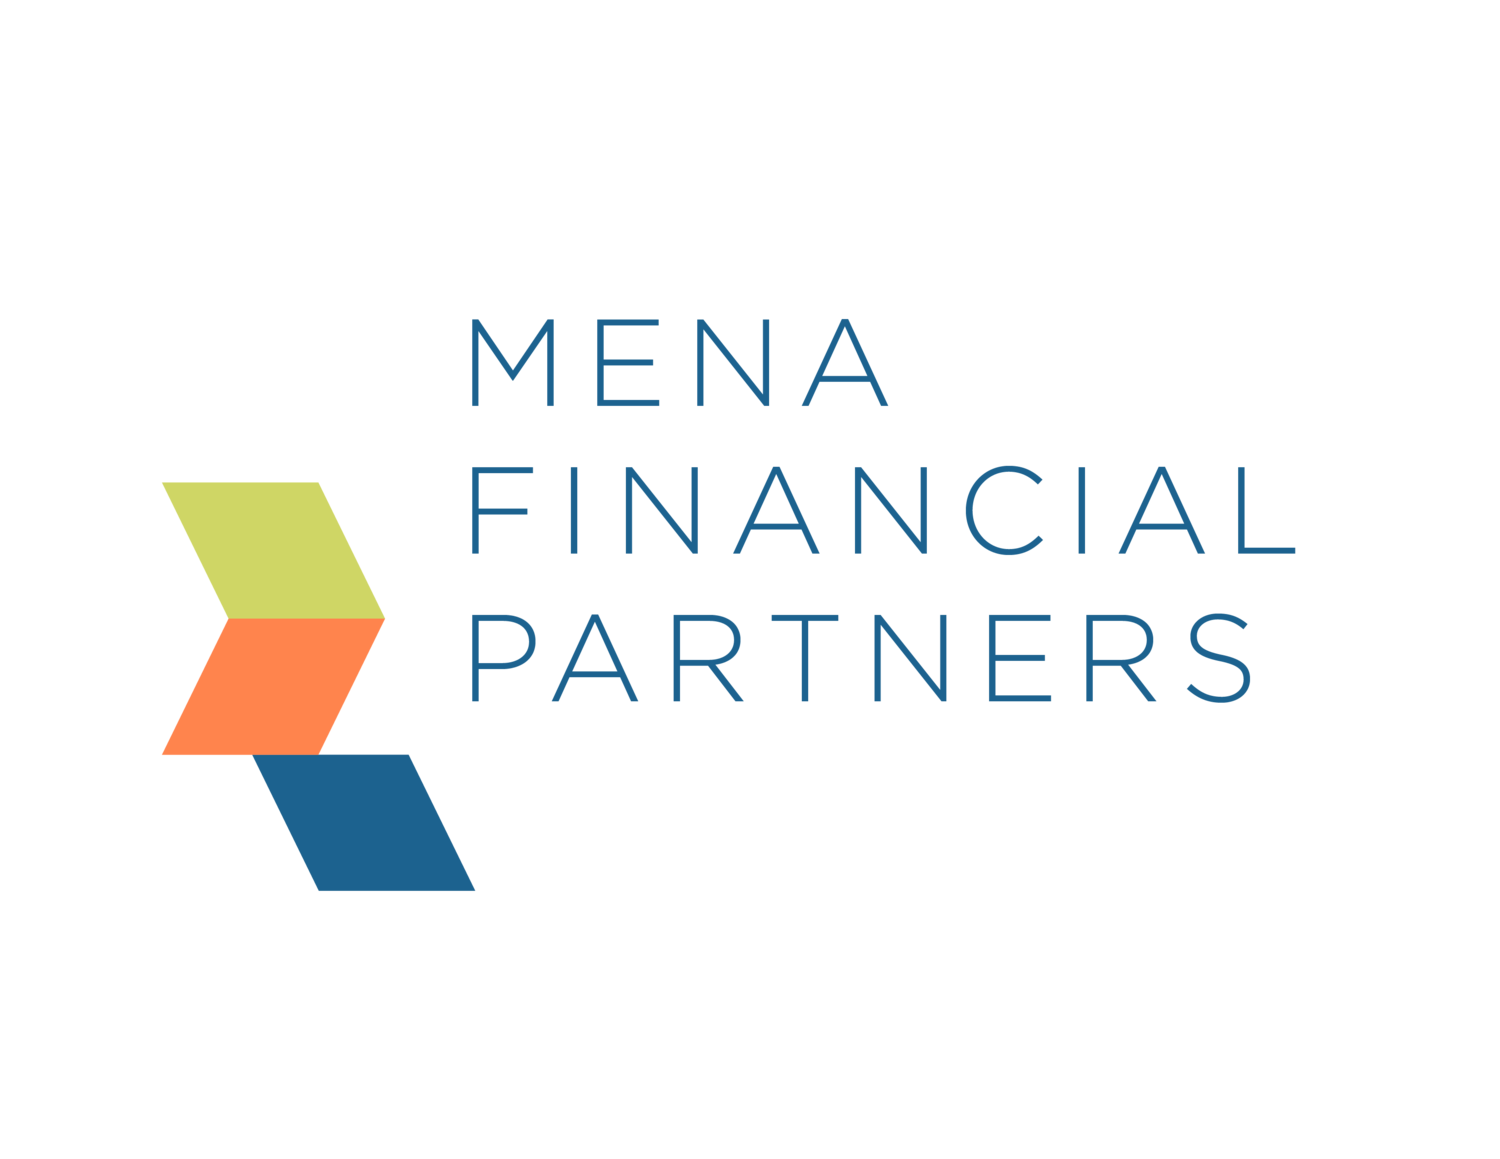 MENA Financial Partners